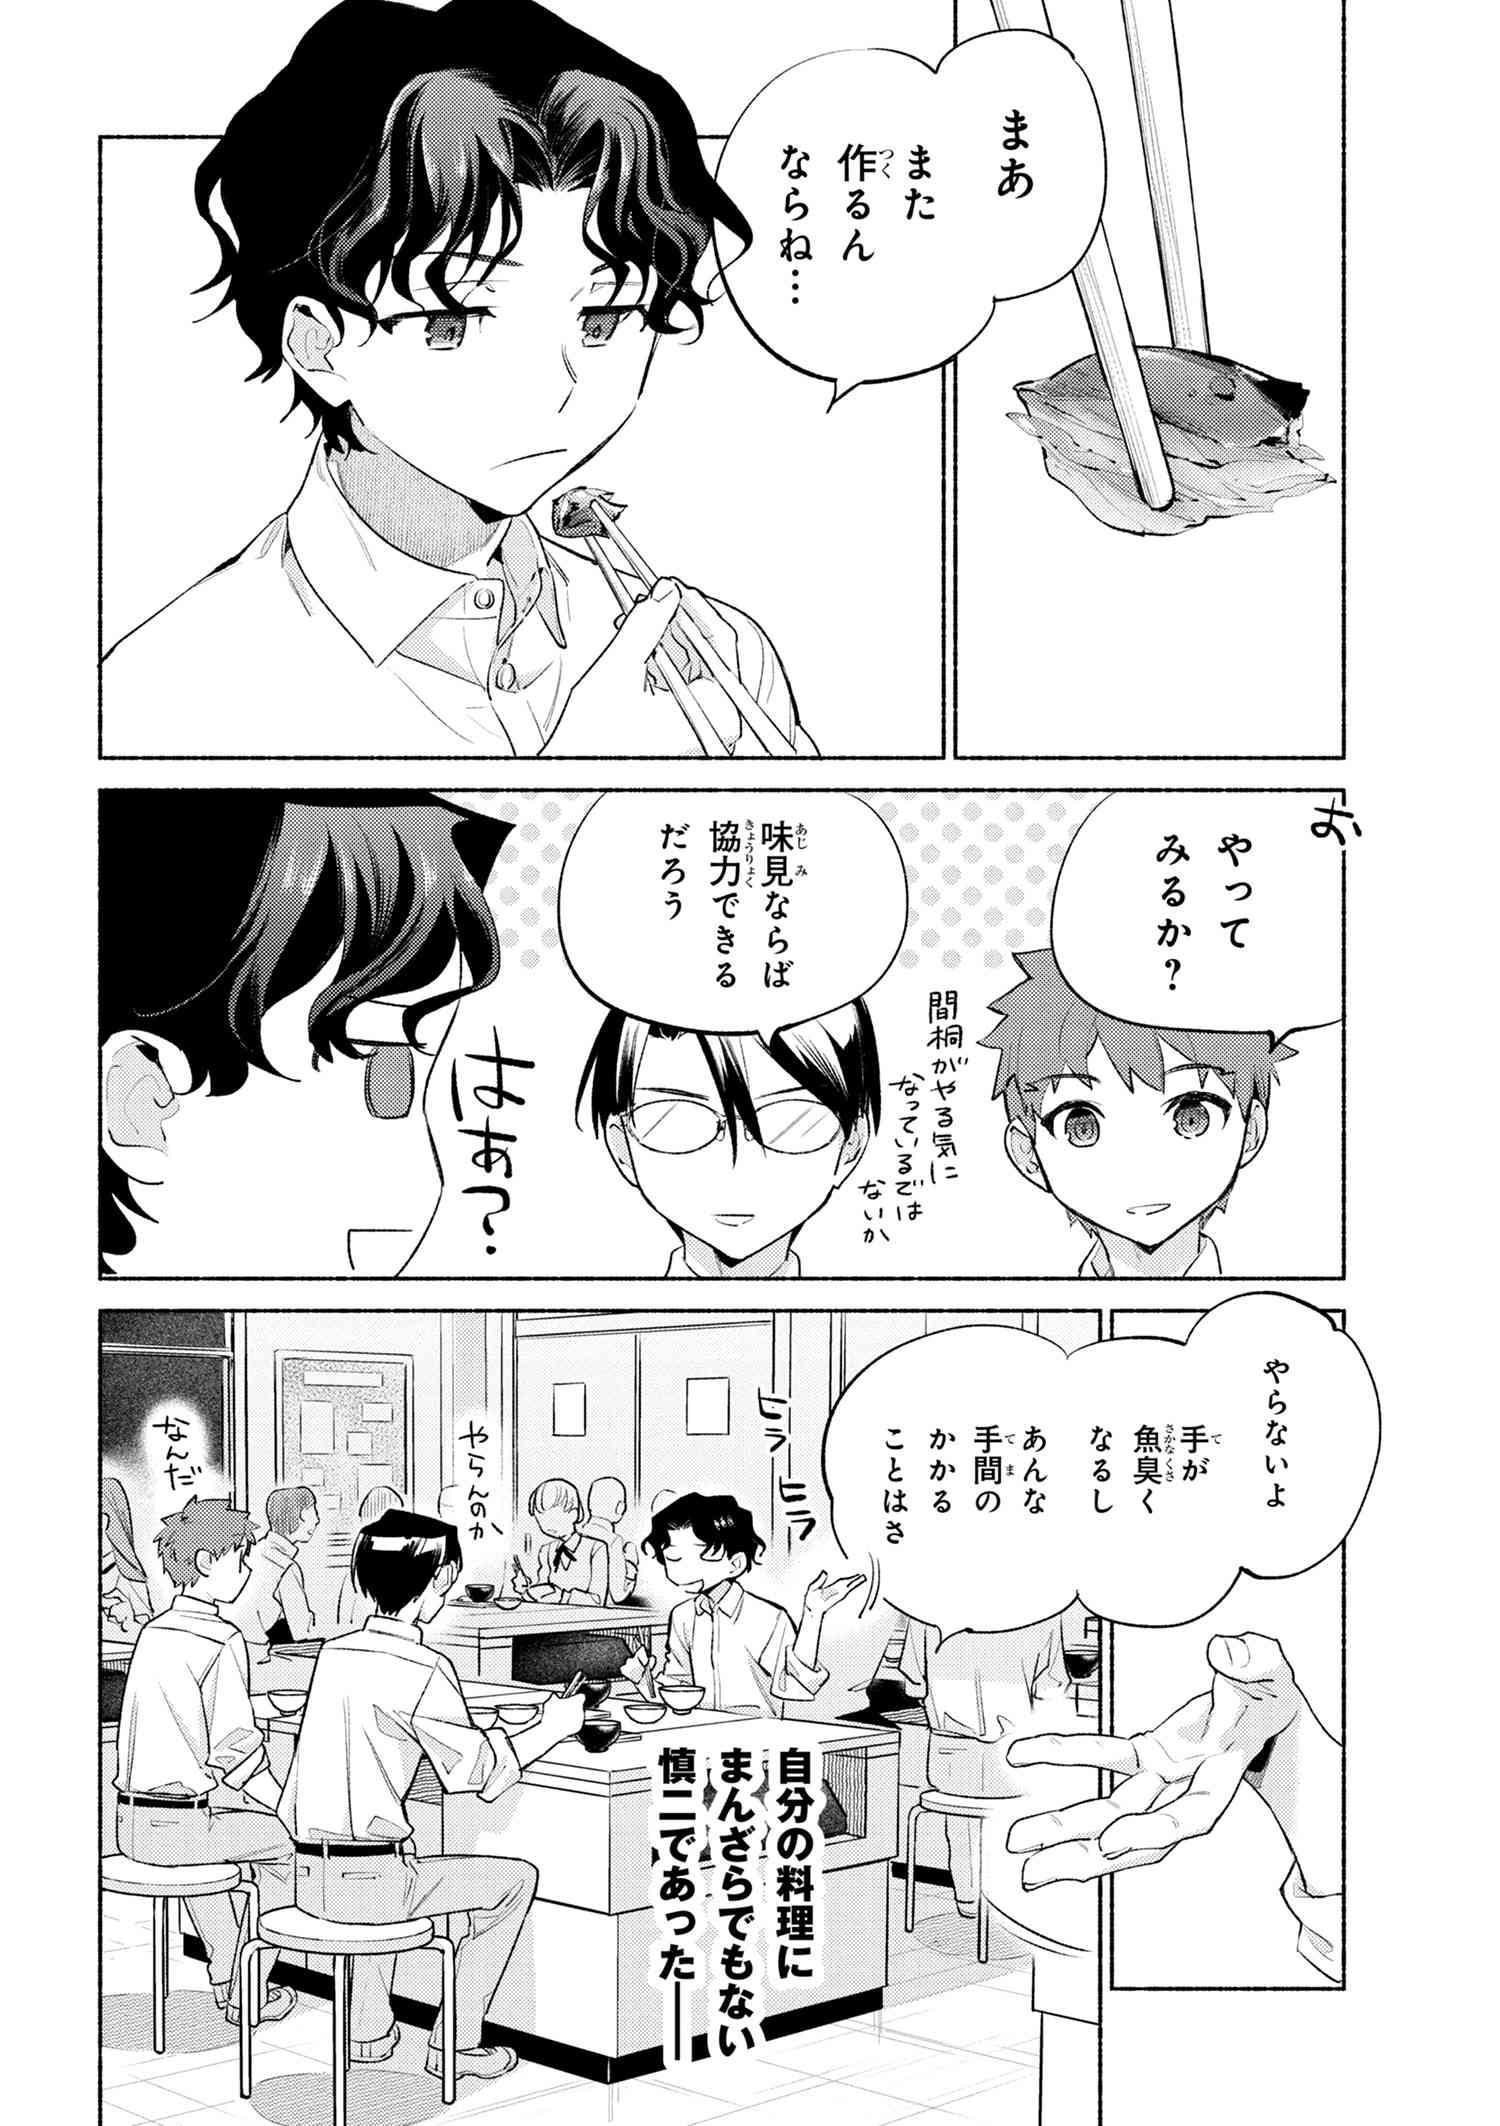 Emiya-san Chi no Kyou no Gohan - Chapter 59 - Page 22